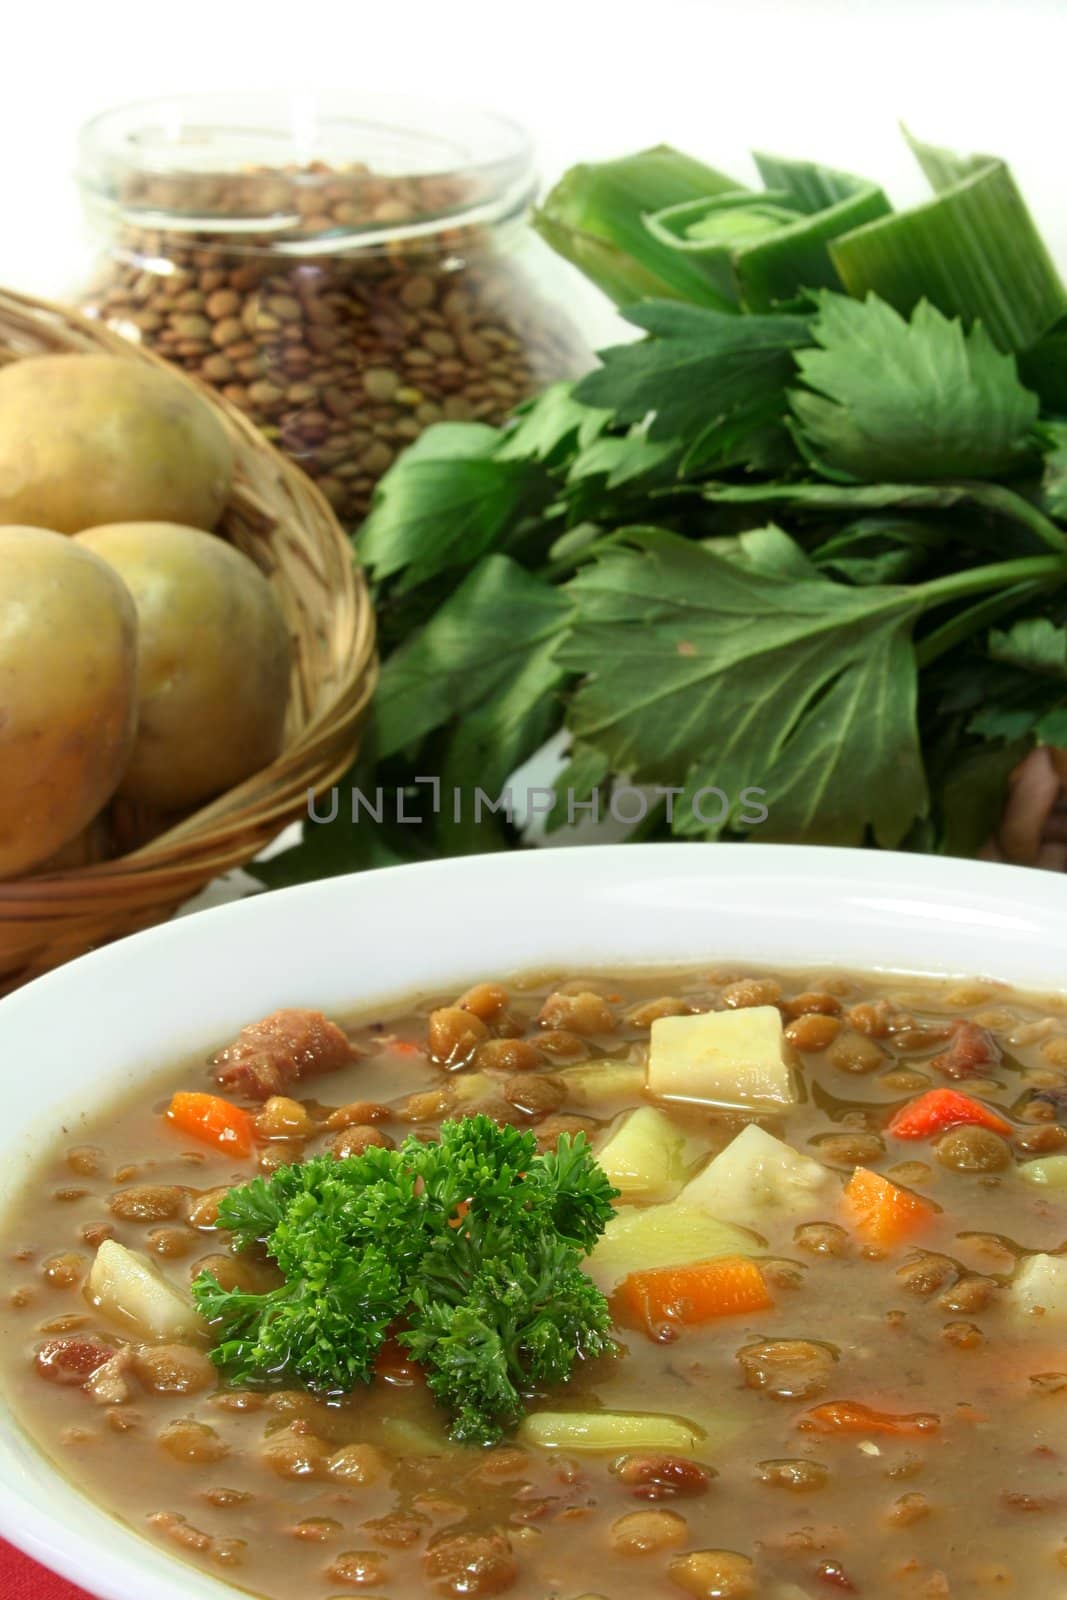 Lentil stew by silencefoto